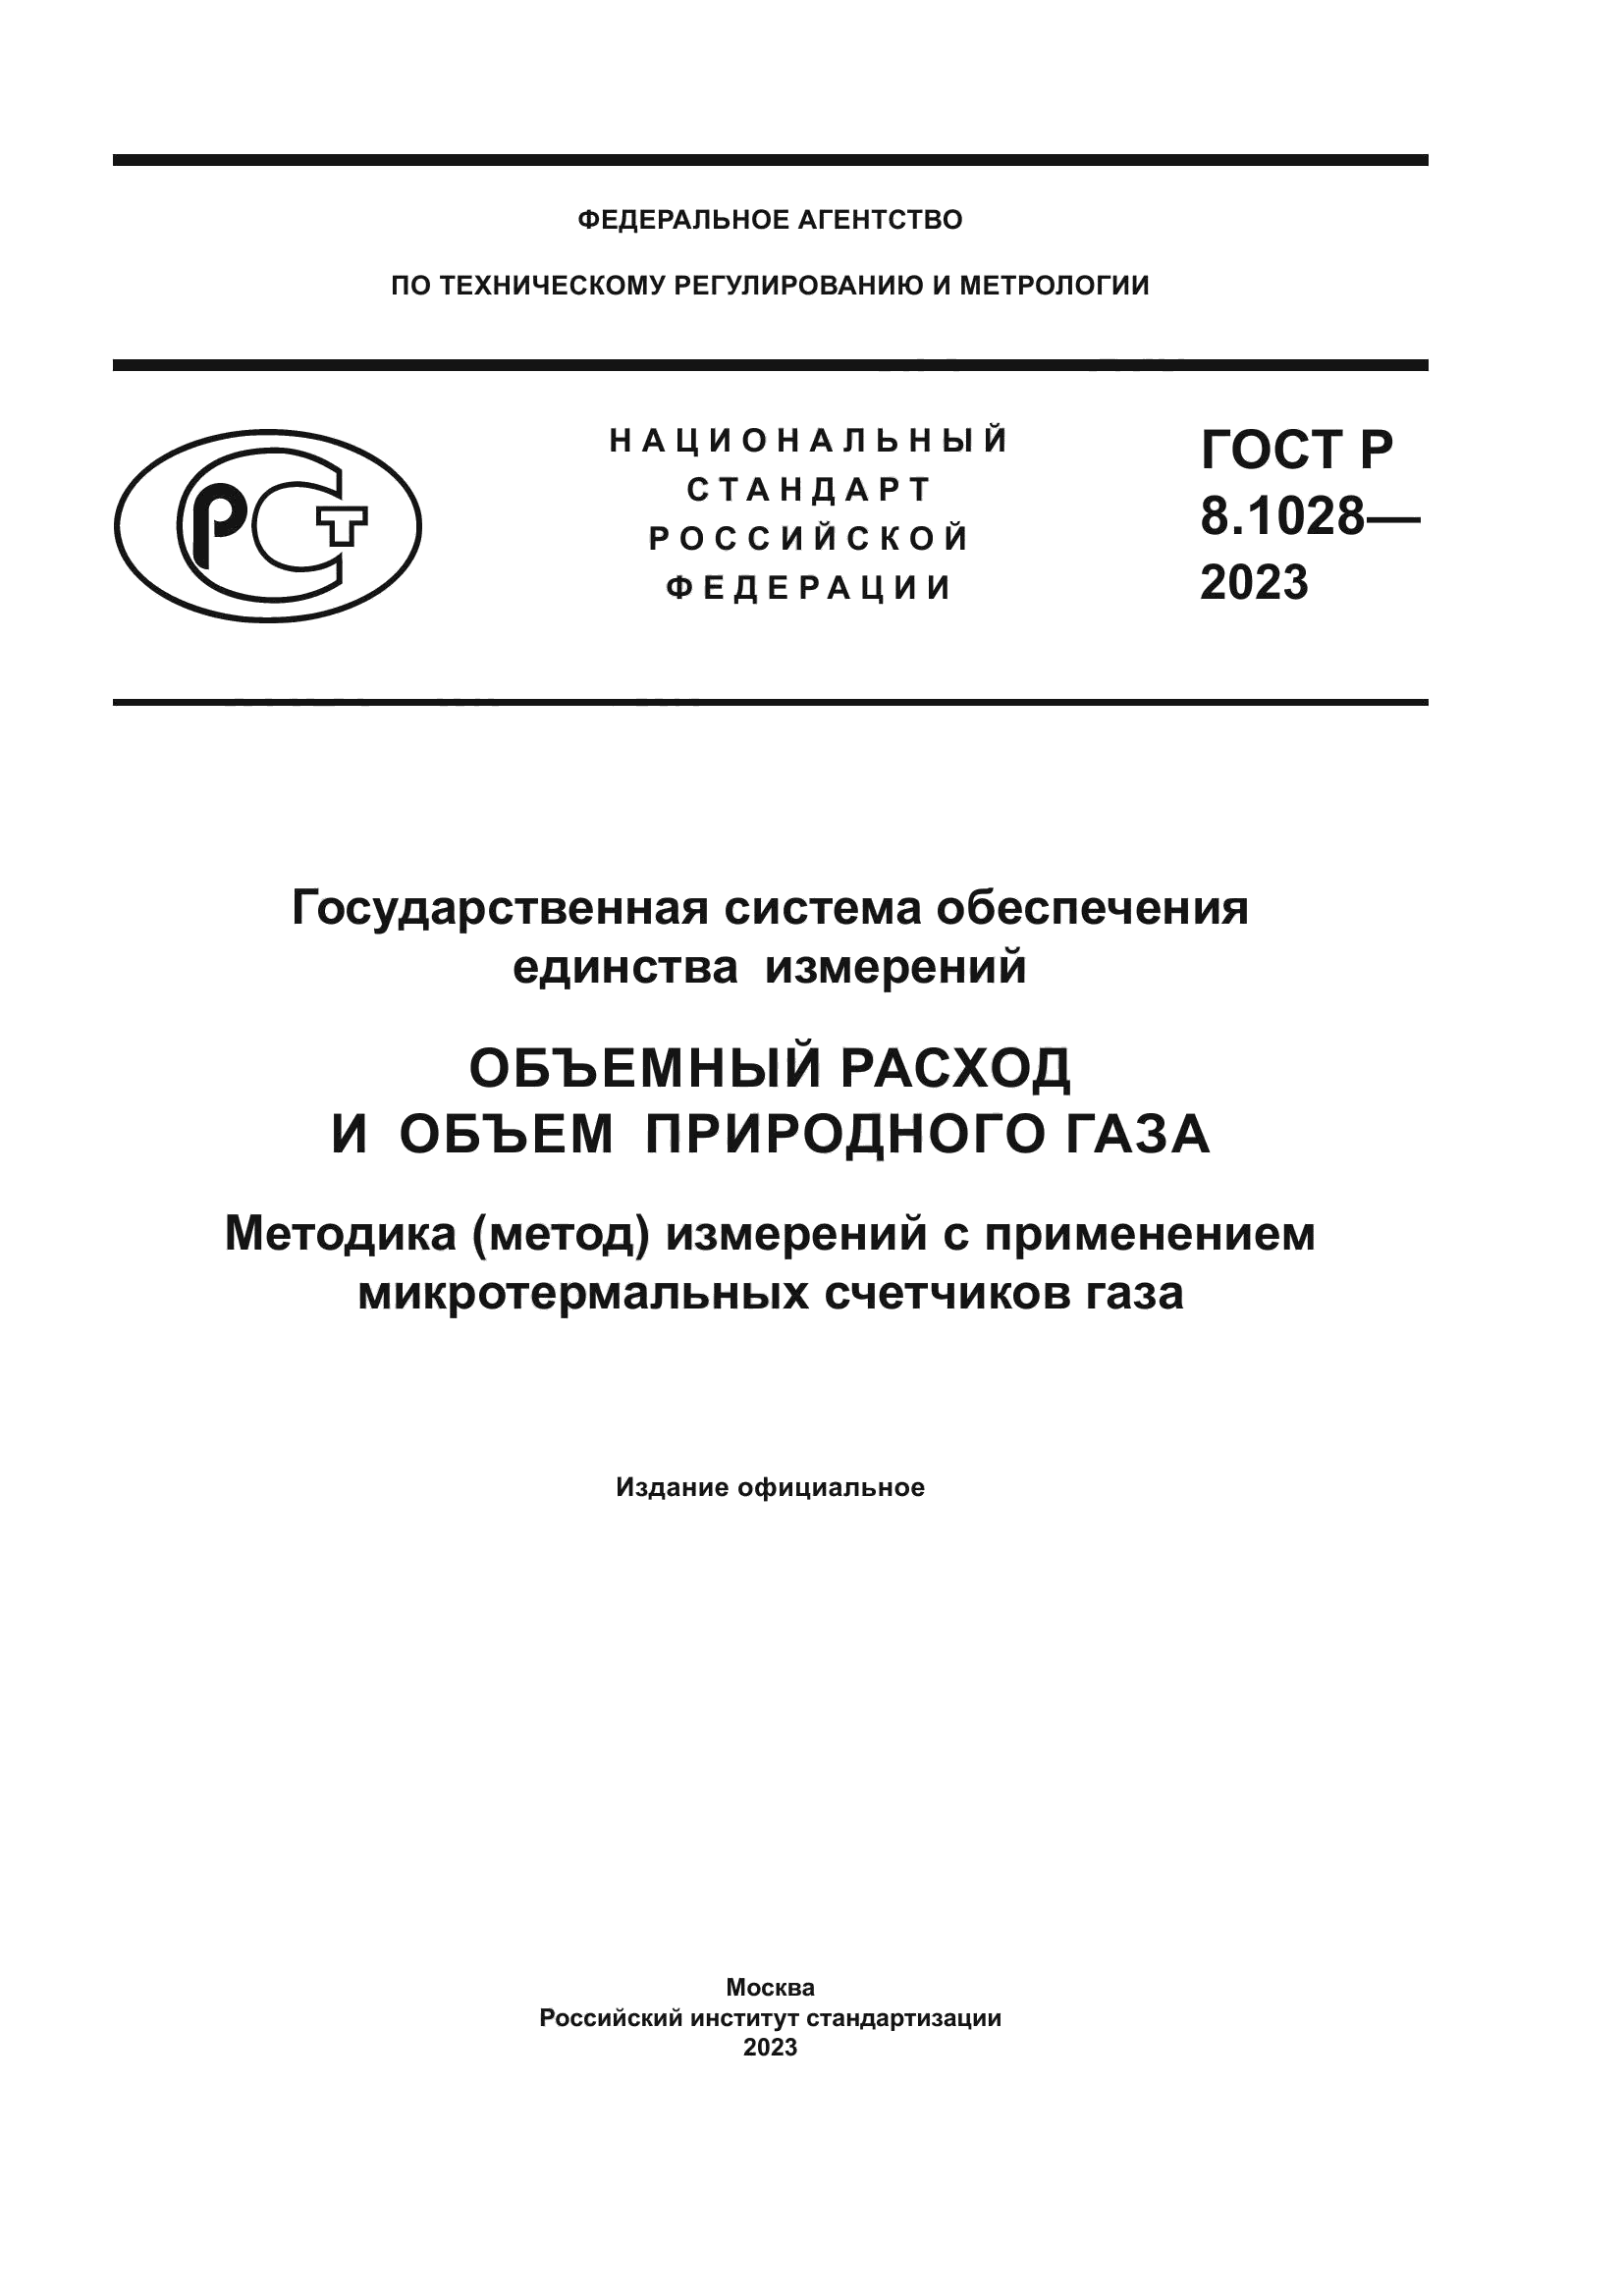 ГОСТ Р 8.1028-2023